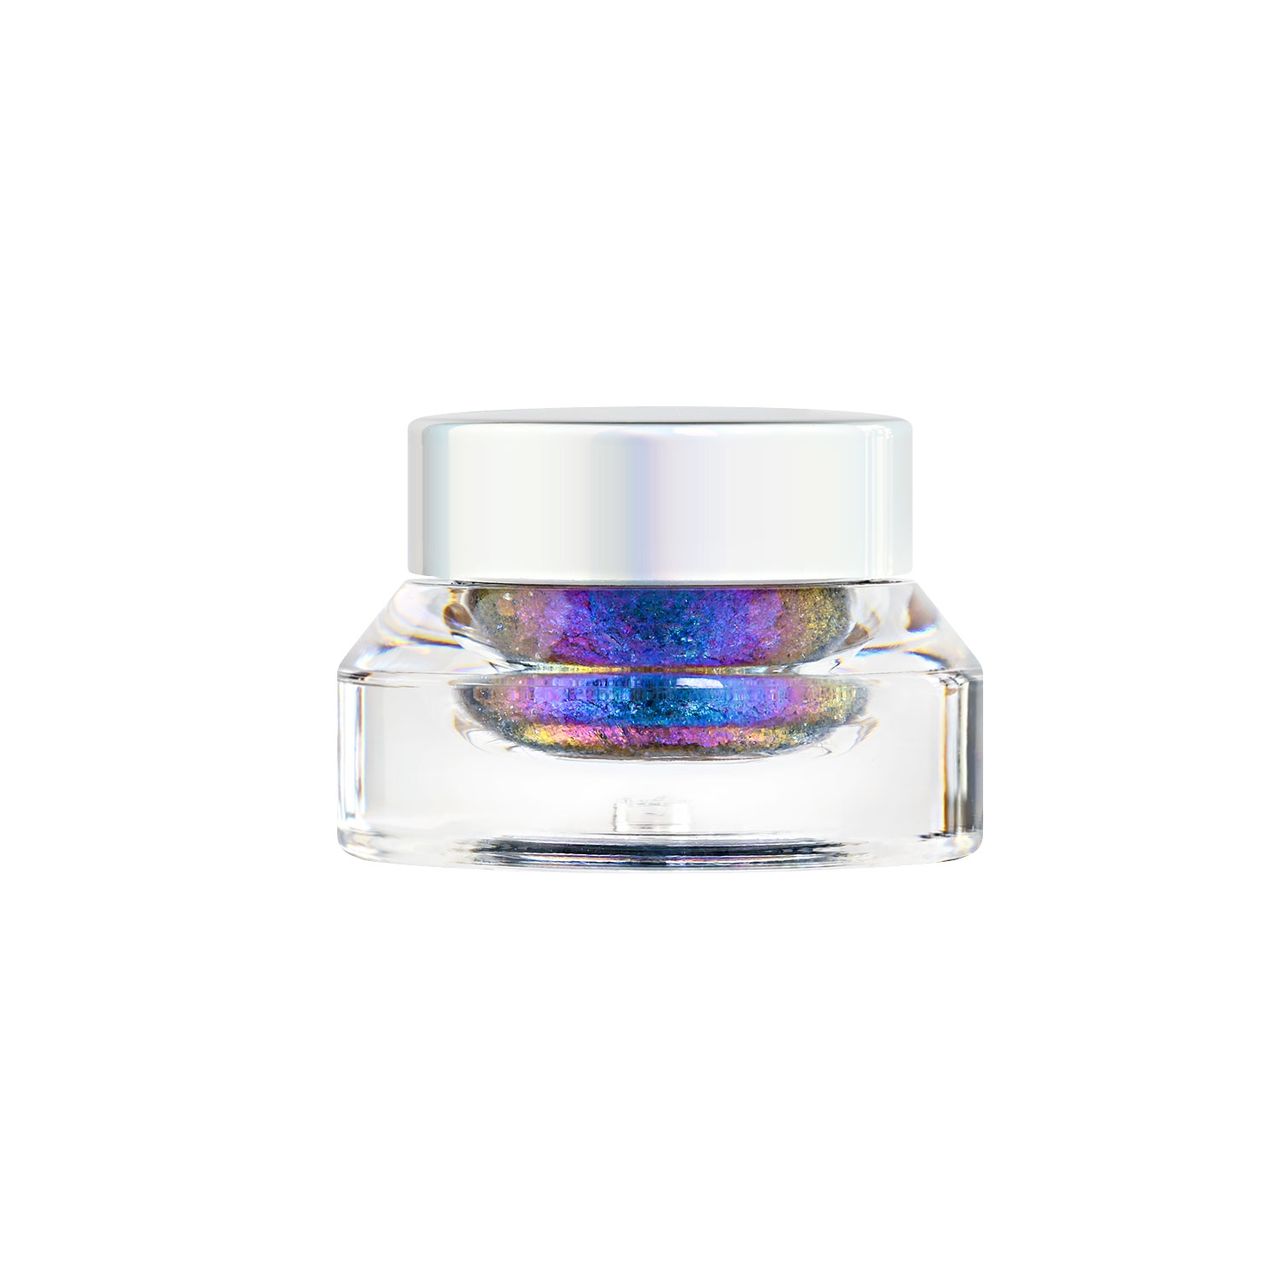 Boujee Beauty Multichrome Magic Flakes Jar